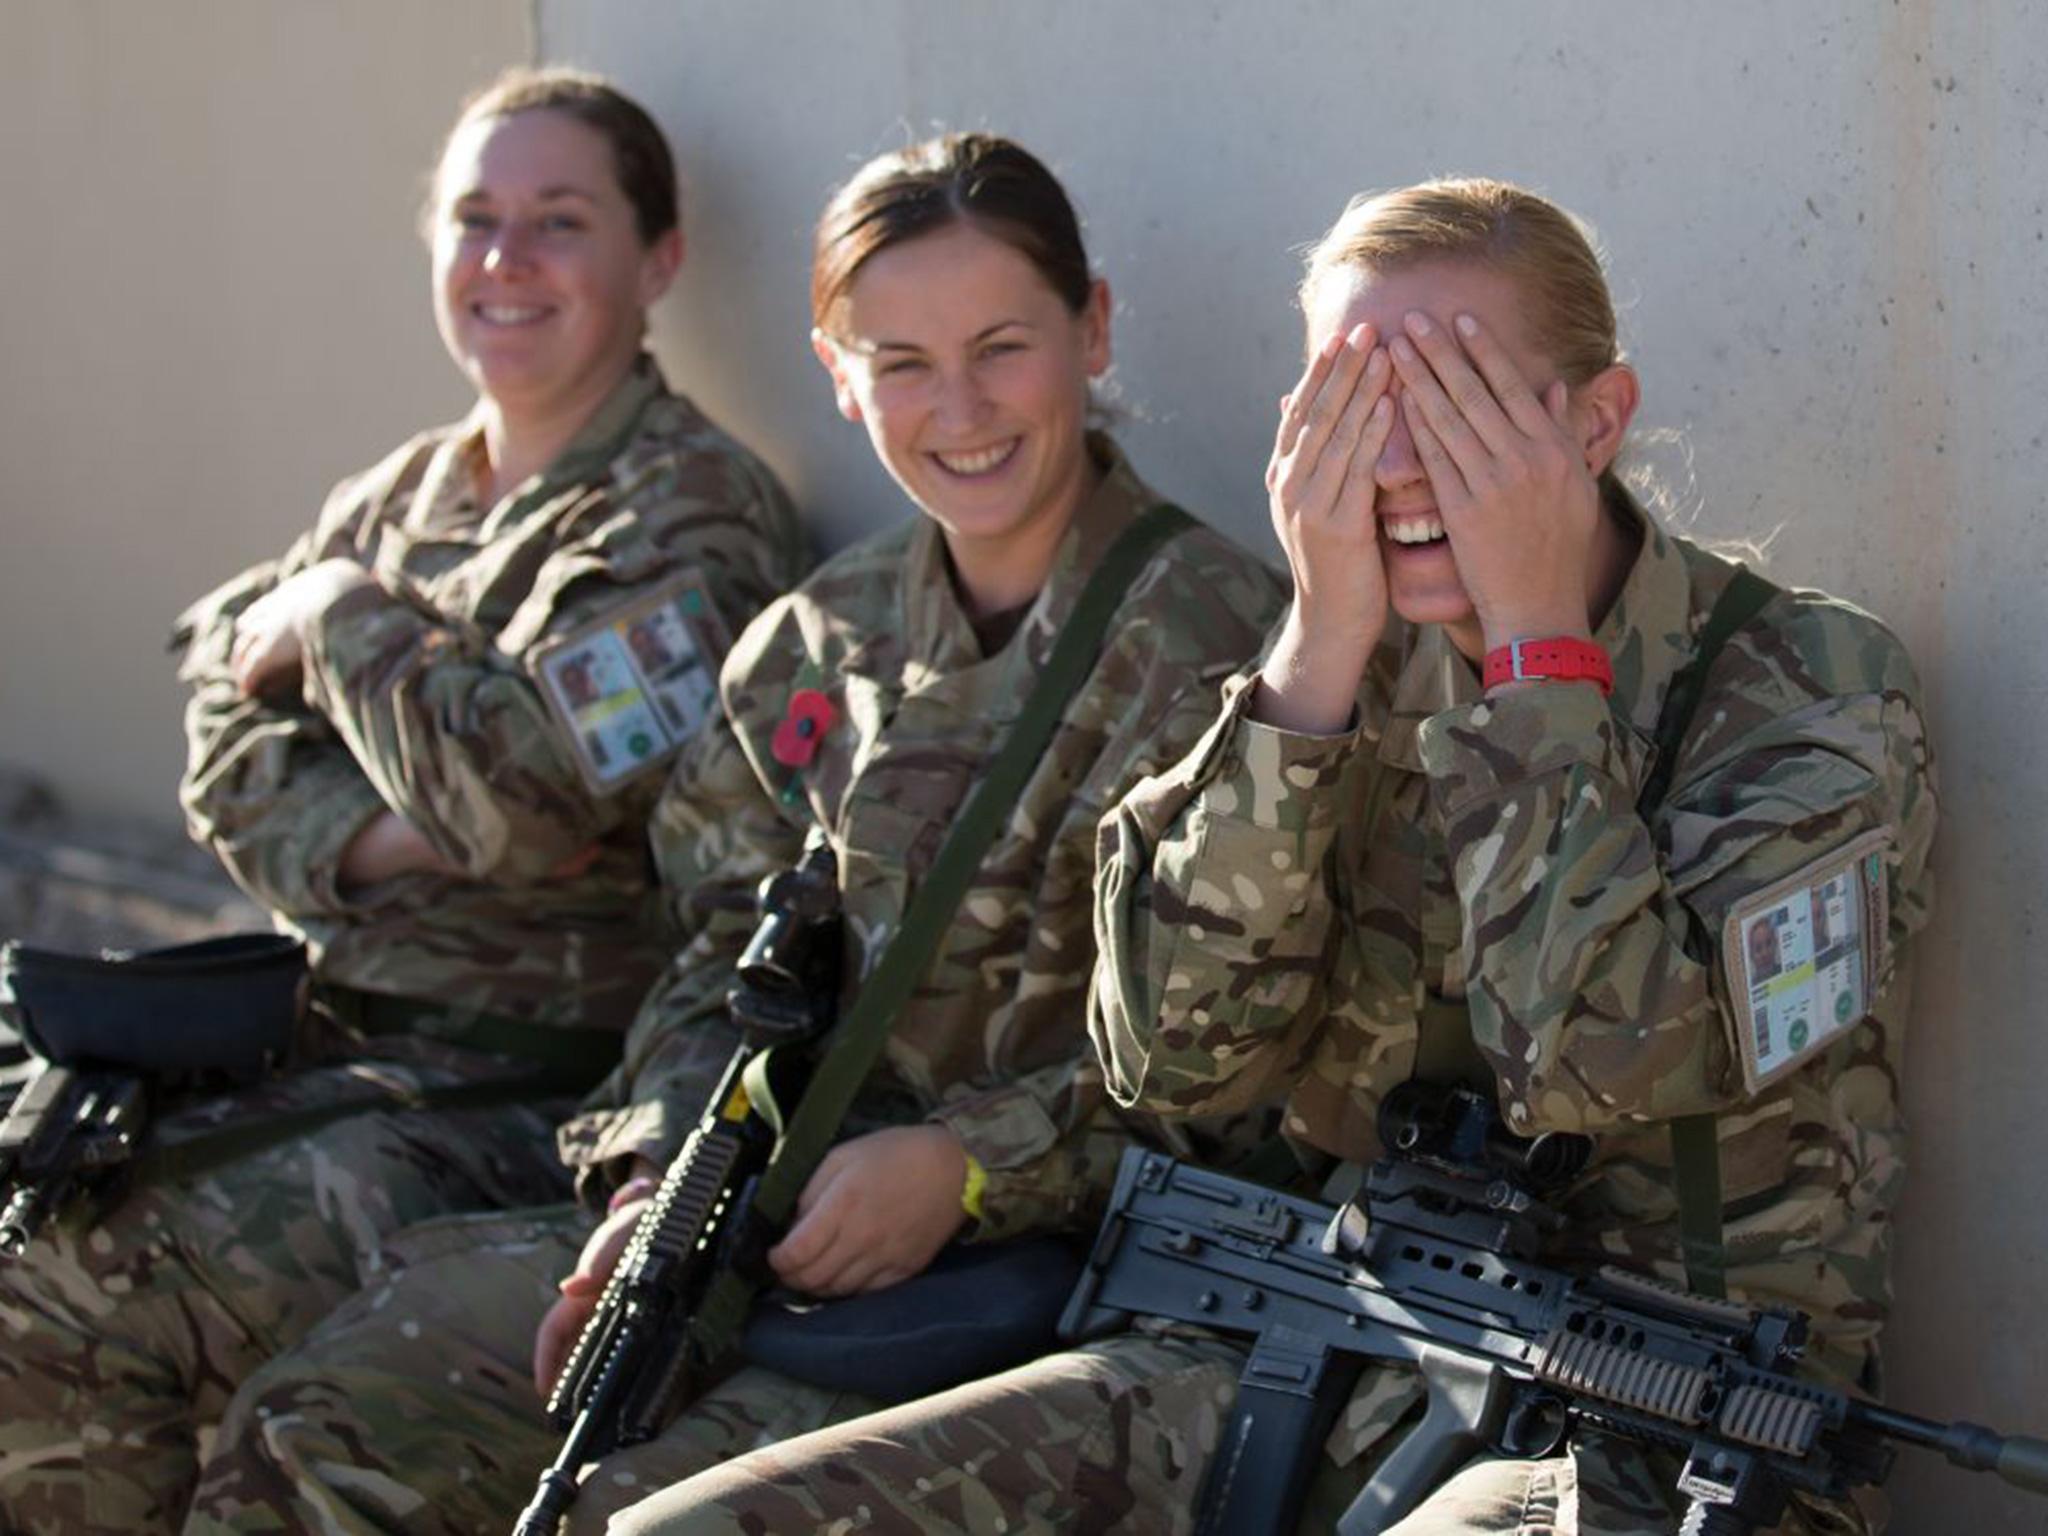 British female troops